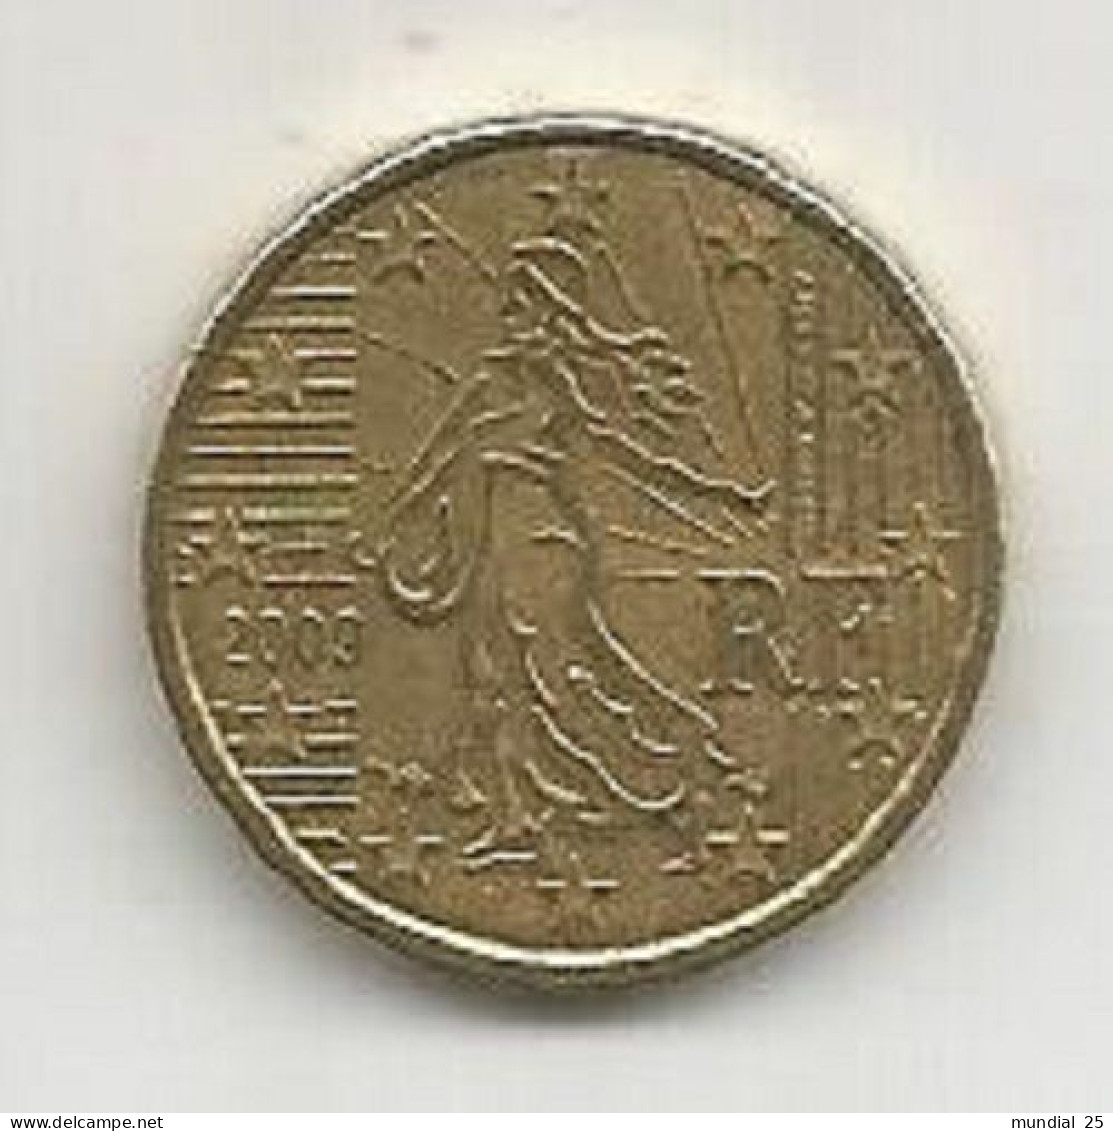 FRANCE 10 EURO CENT 2009 - France